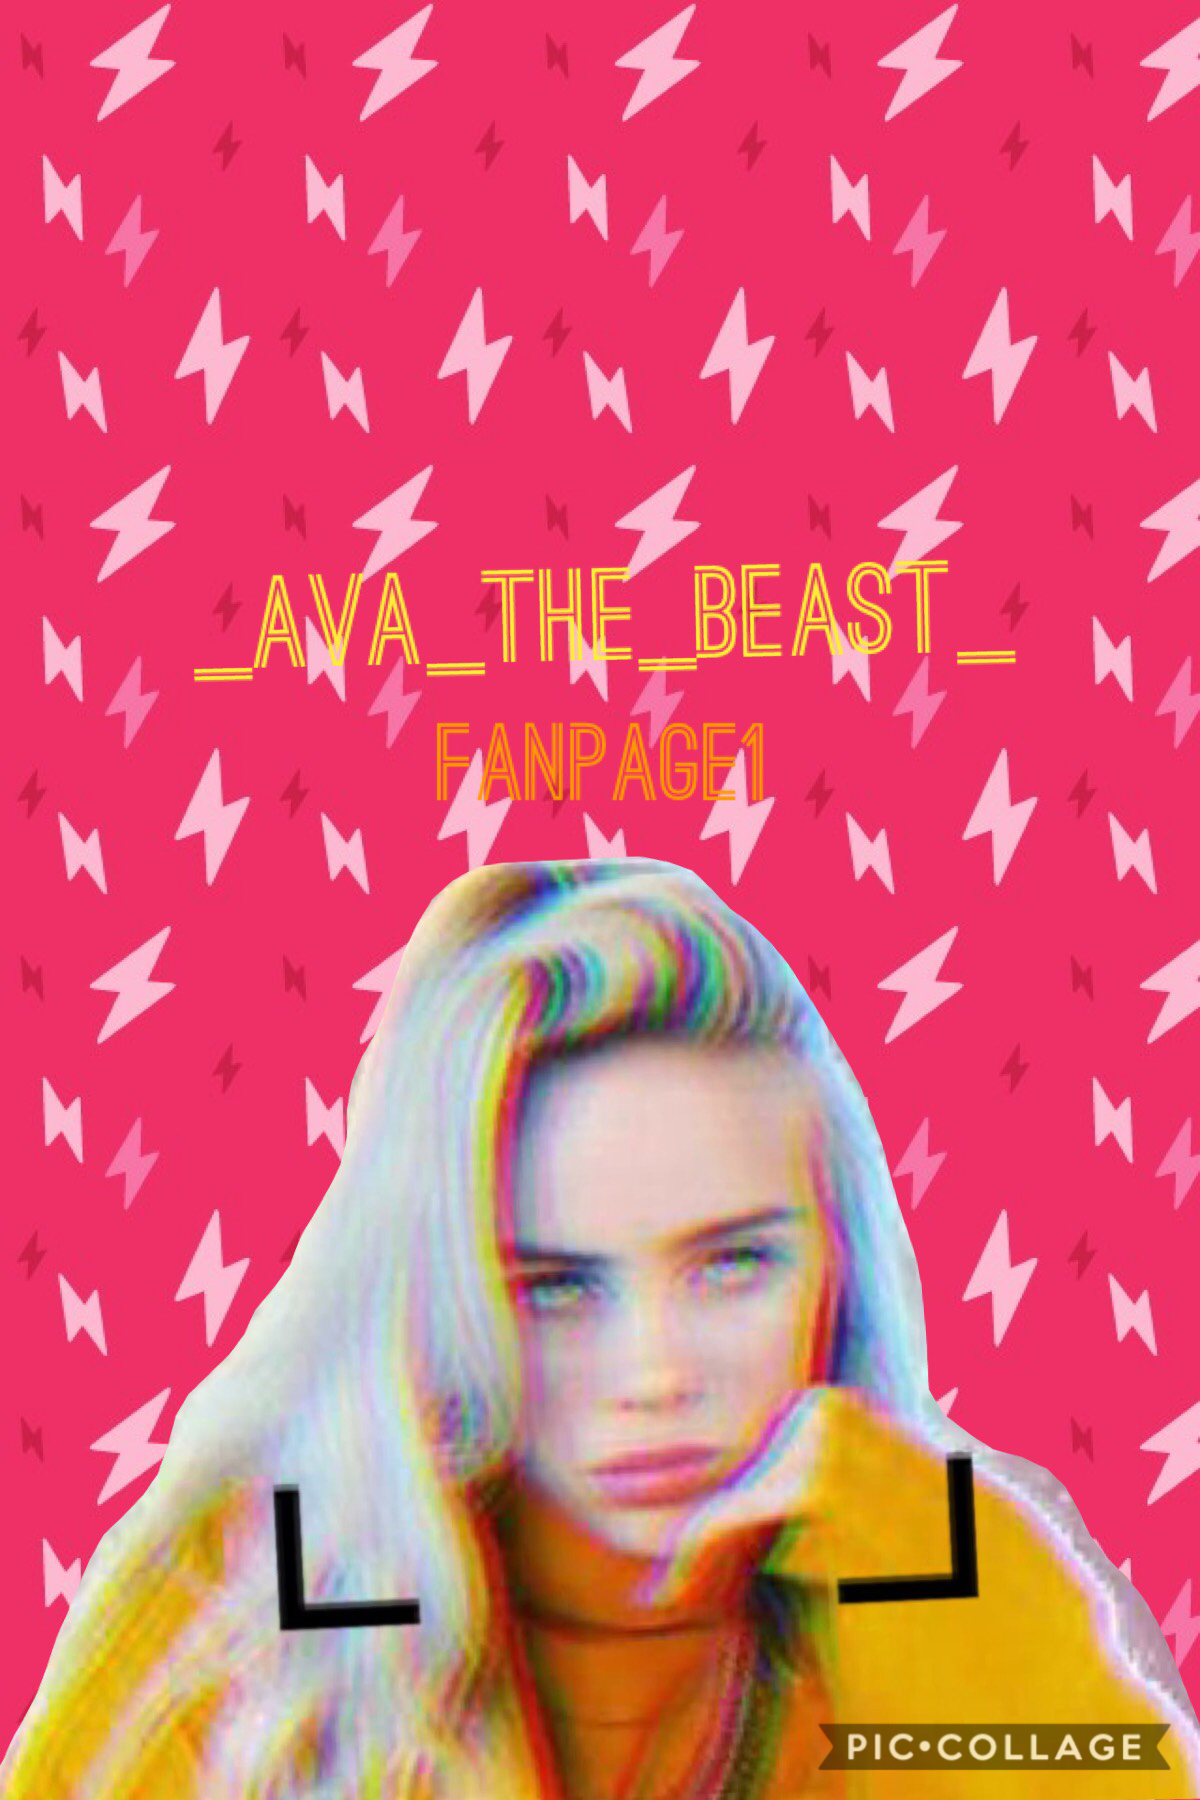 Ava the beast fanpage! 